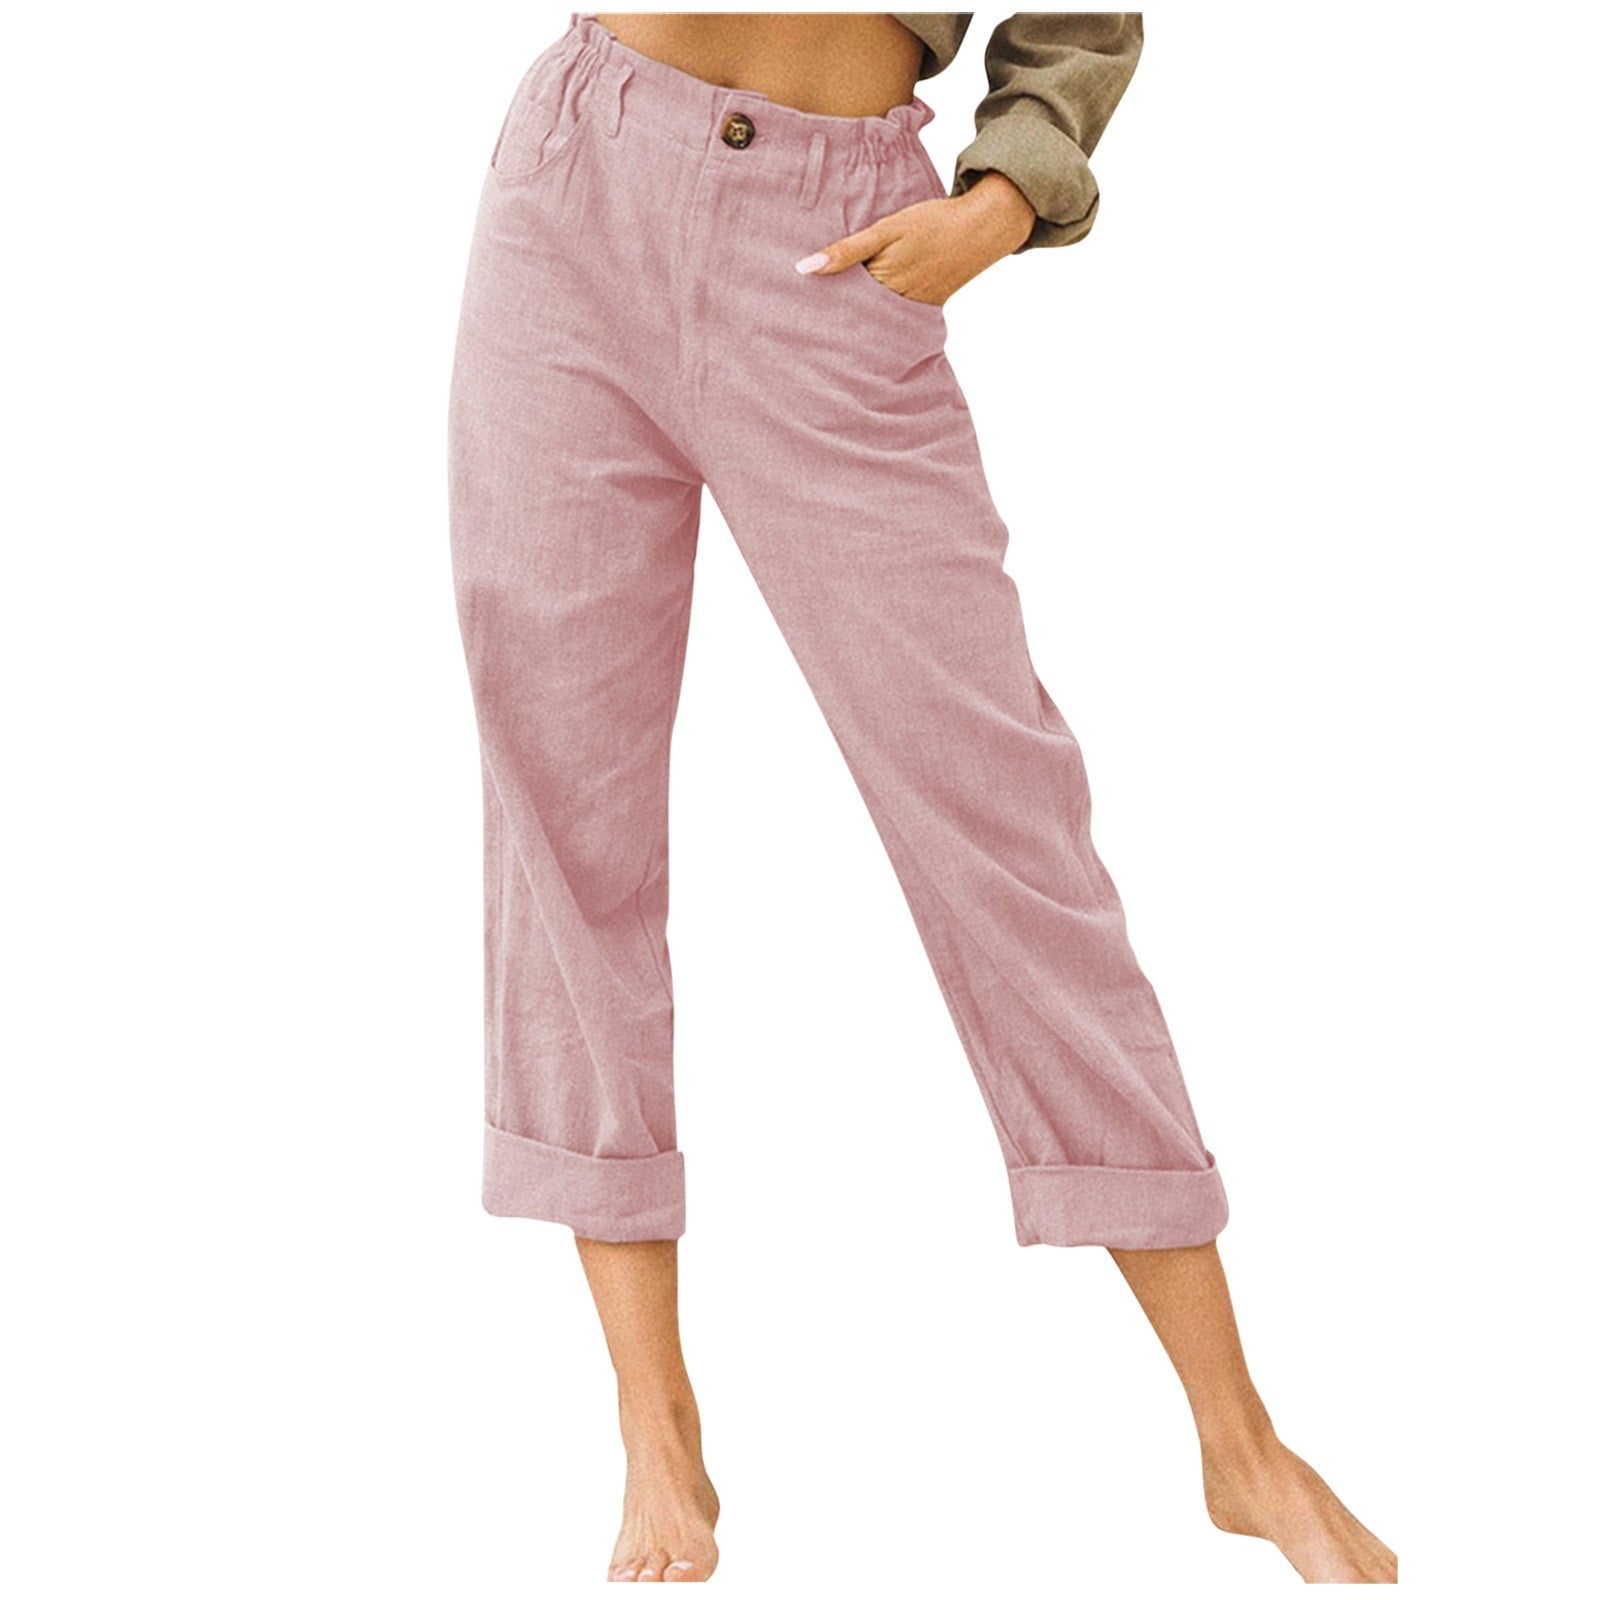 Clearance Summer Capri Pants for Women, Women's Cotton Linen Button ...